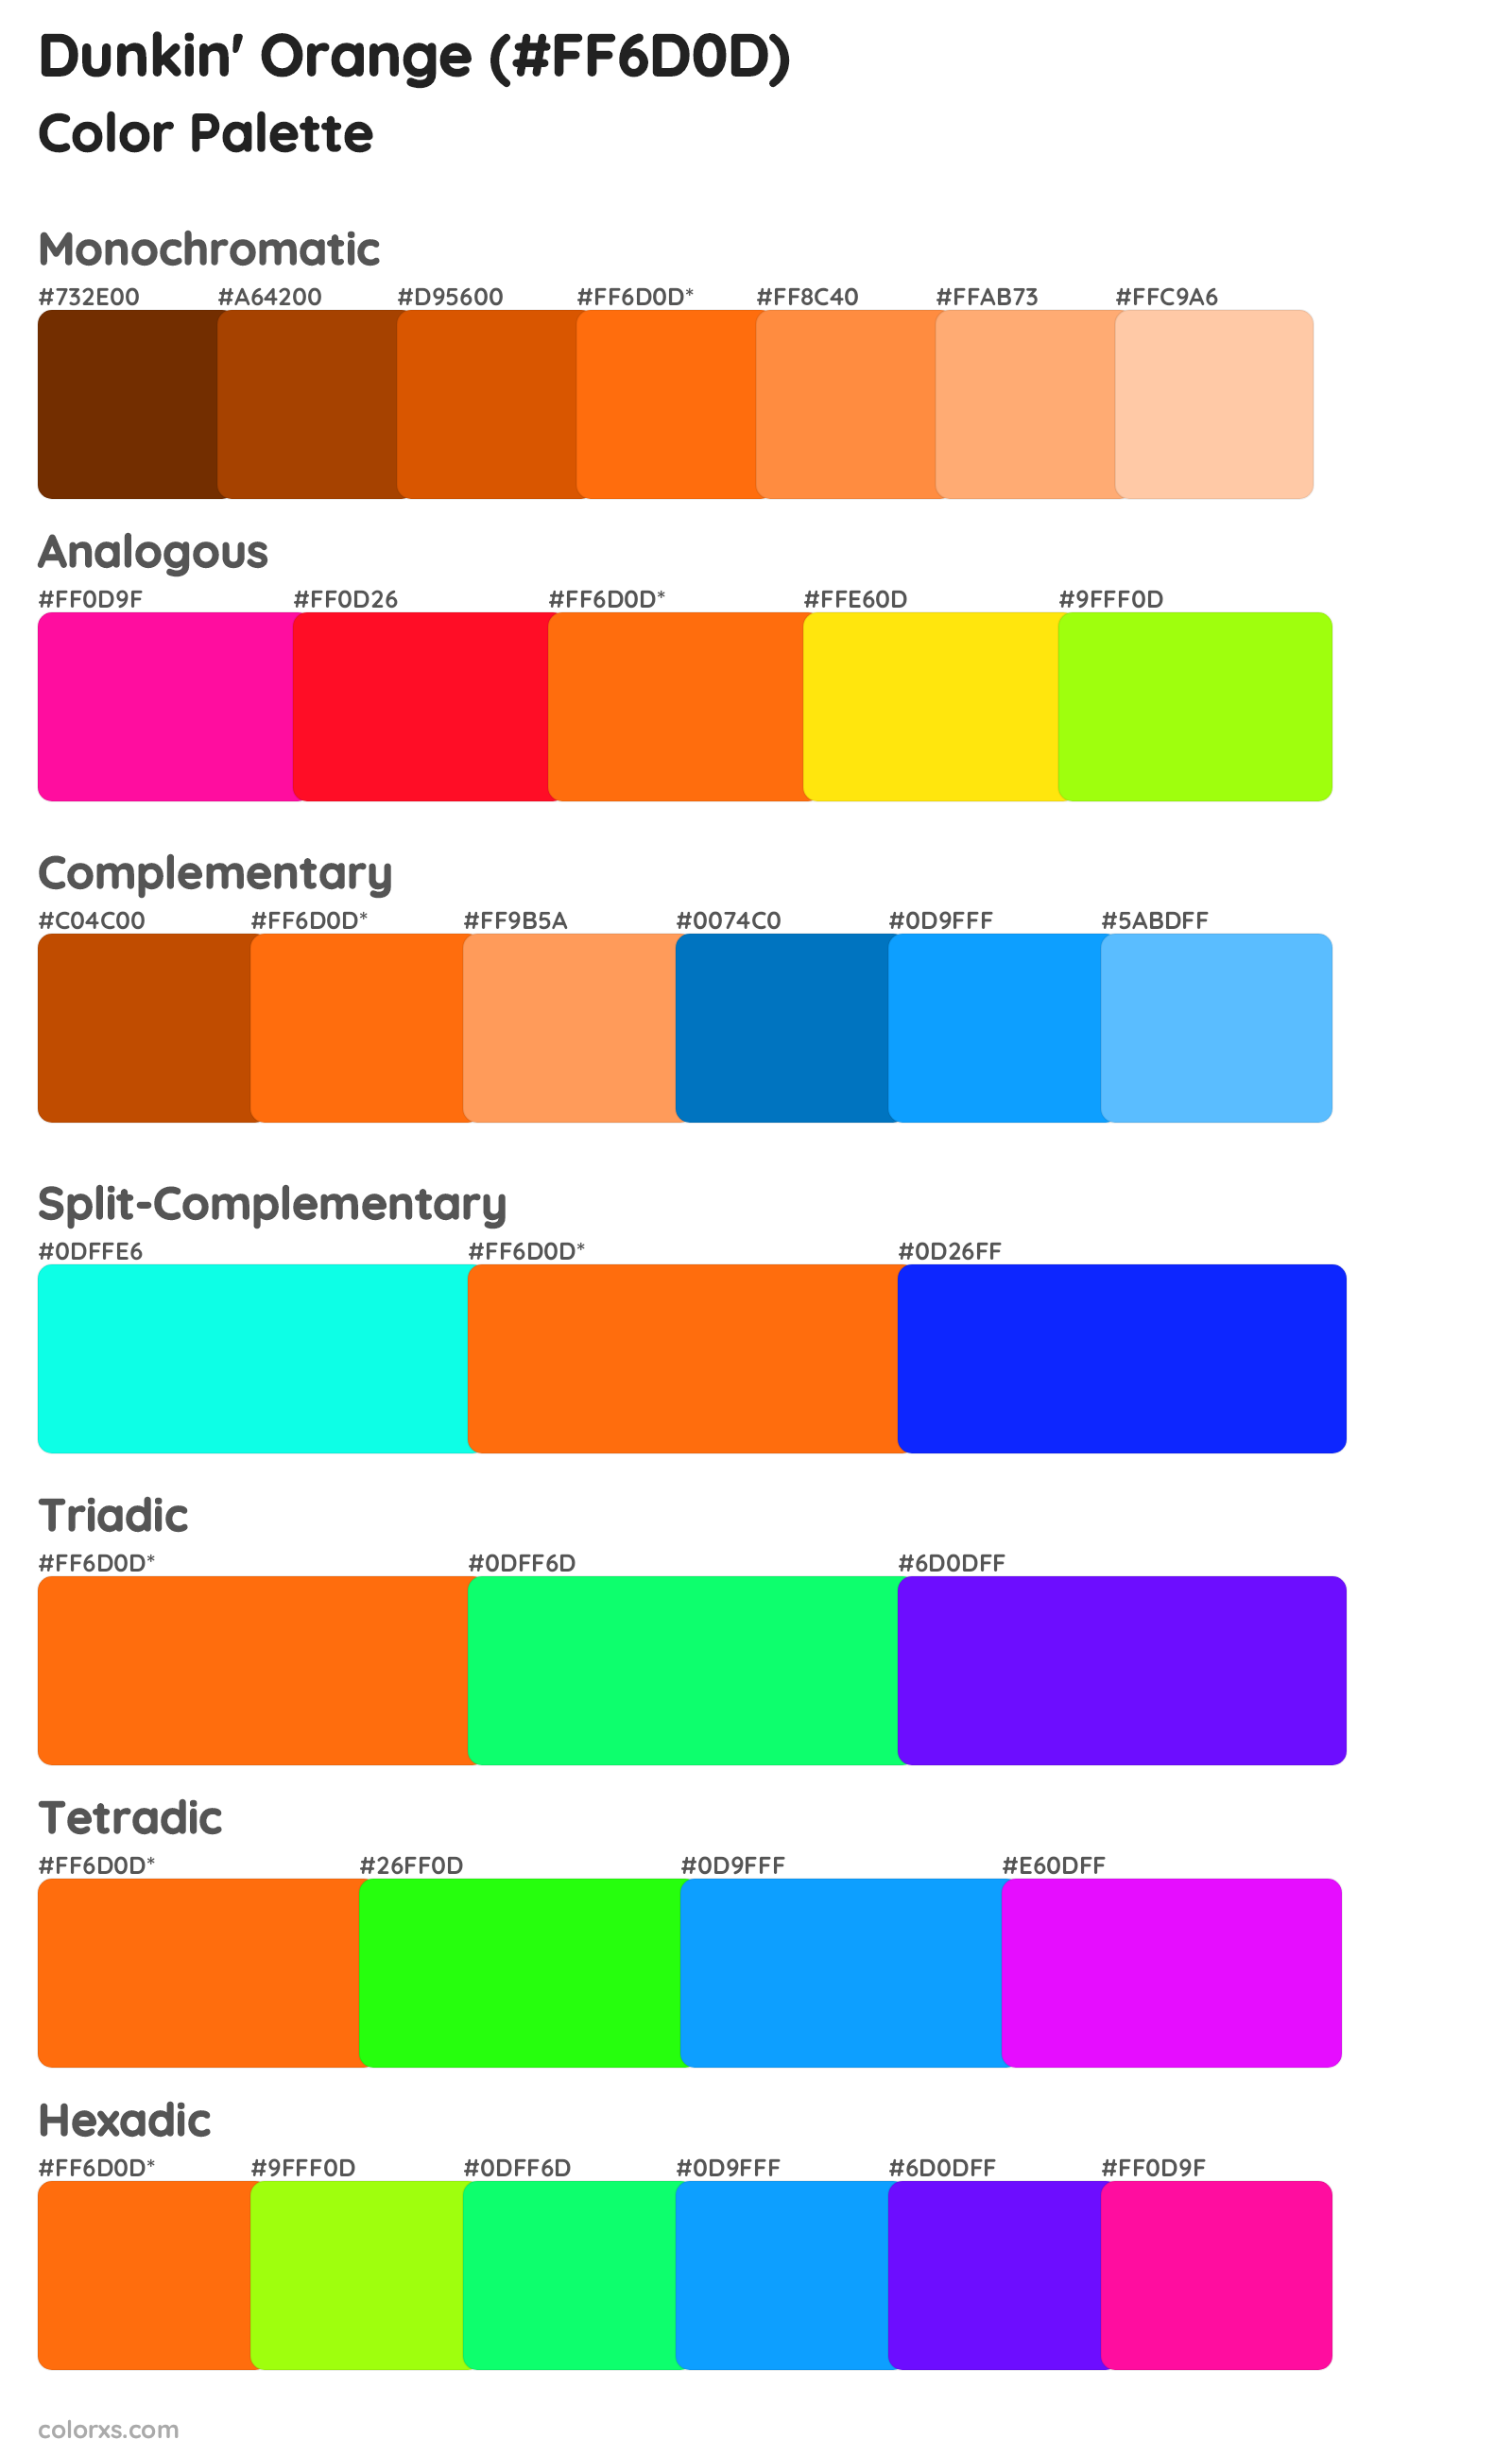 Dunkin' Orange Color Scheme Palettes